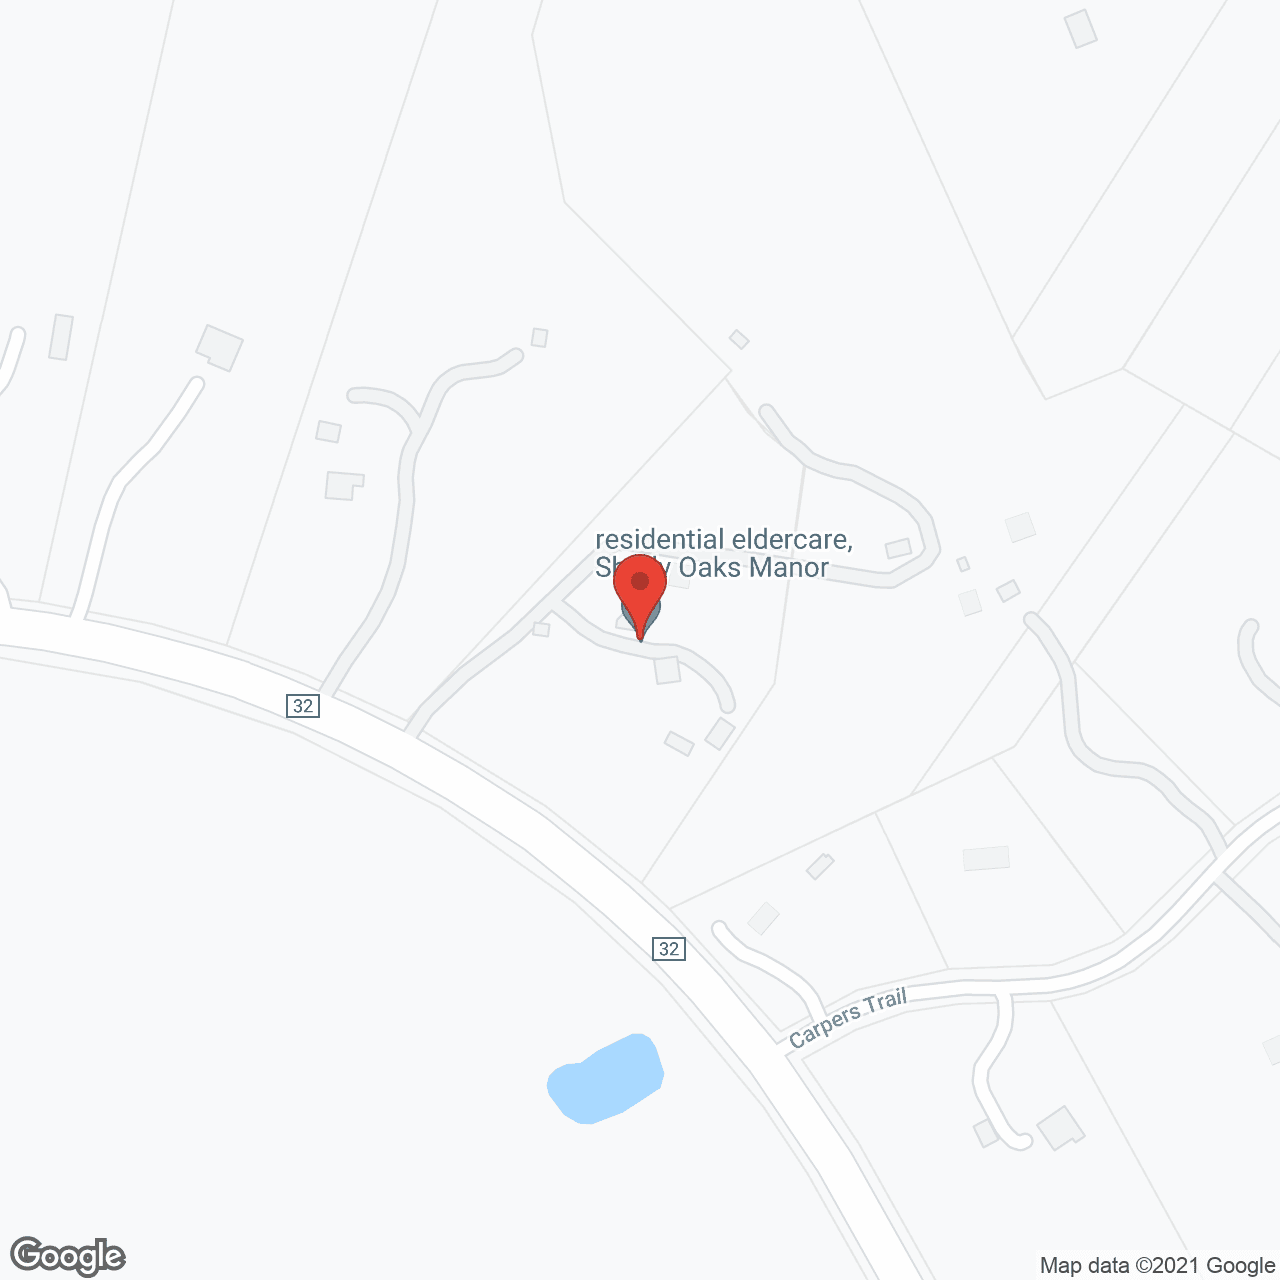 Shady Oaks Manor in google map